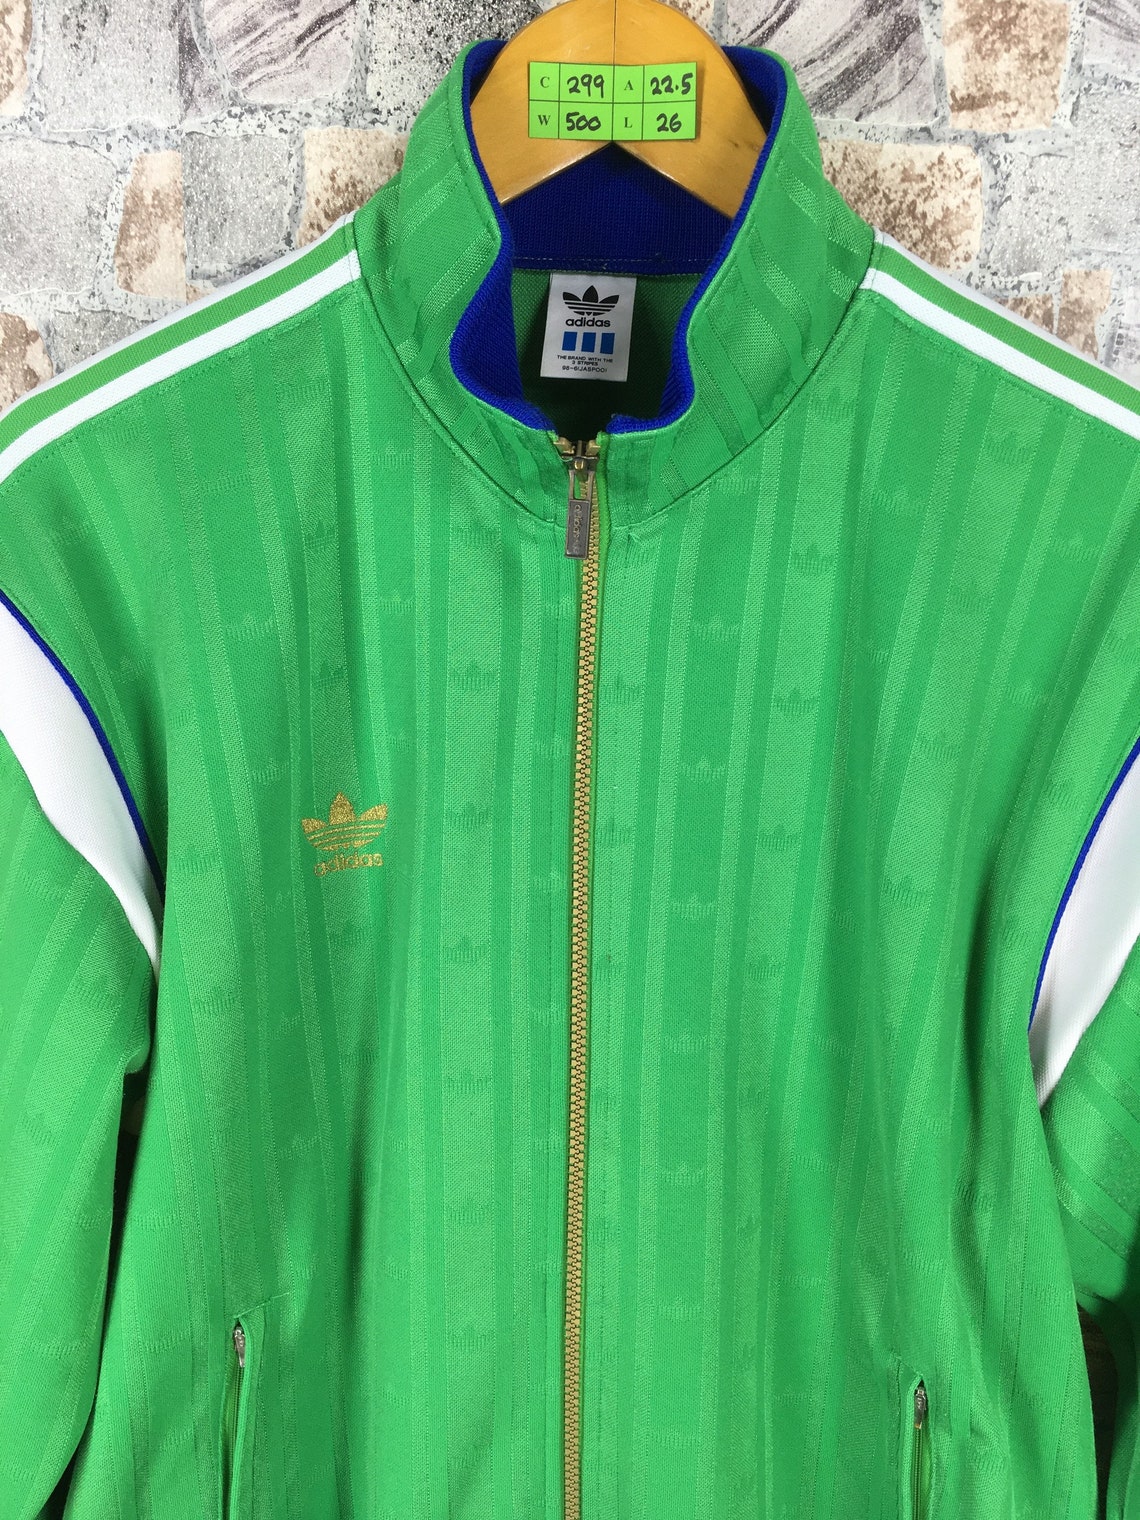 Vintage Adidas Track Top Green Jacket Medium Adidas Trefoil | Etsy